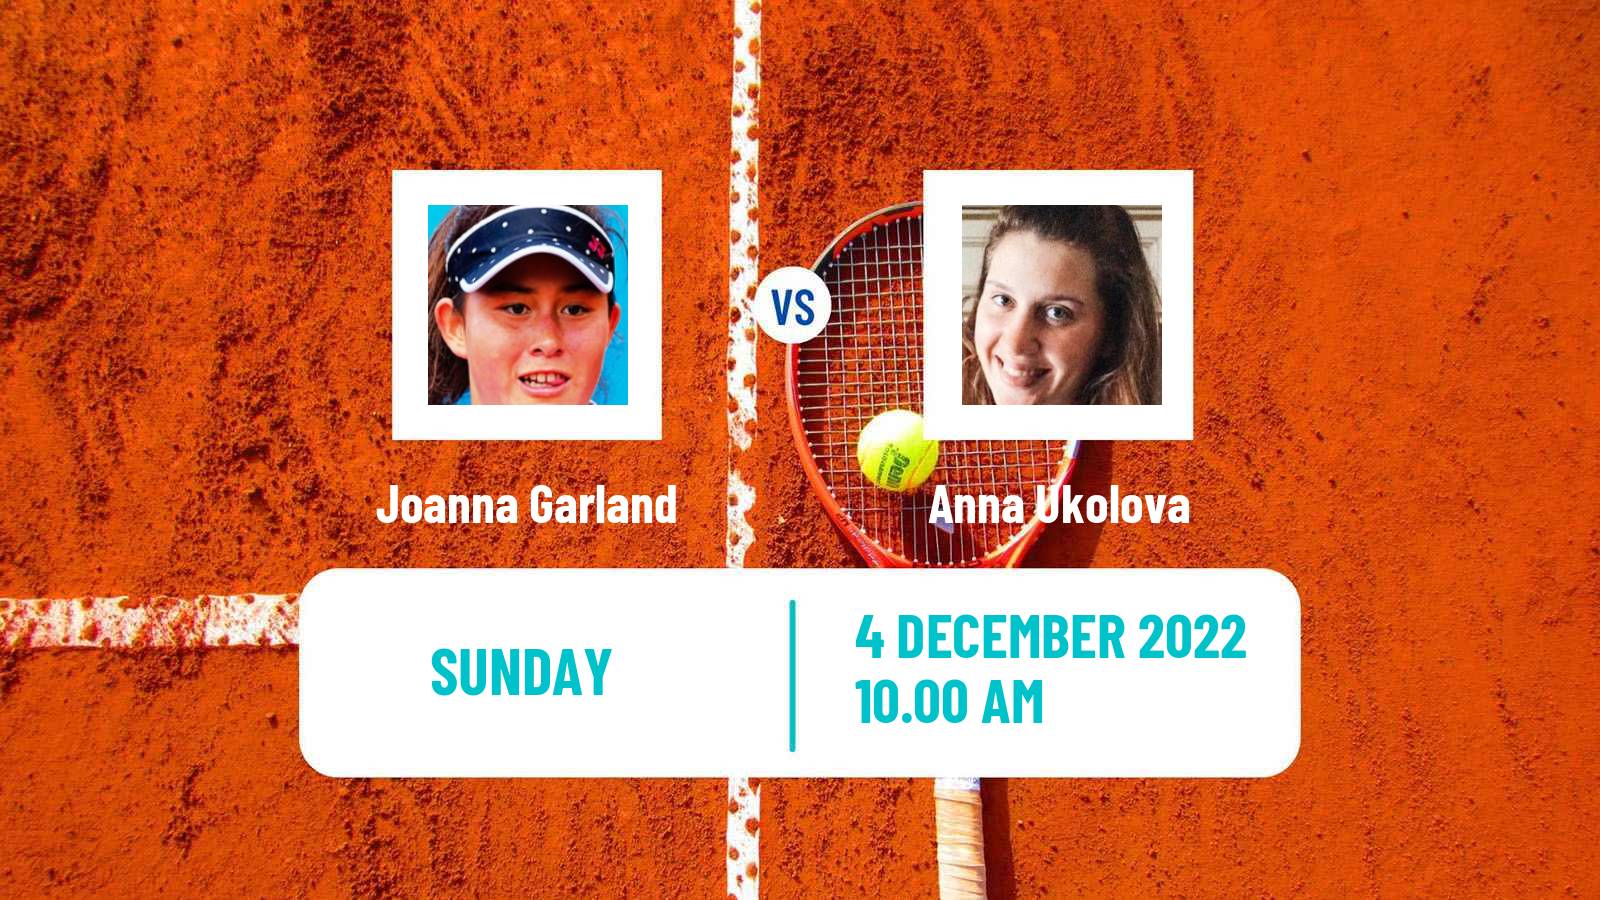 Tennis ATP Challenger Joanna Garland - Anna Ukolova